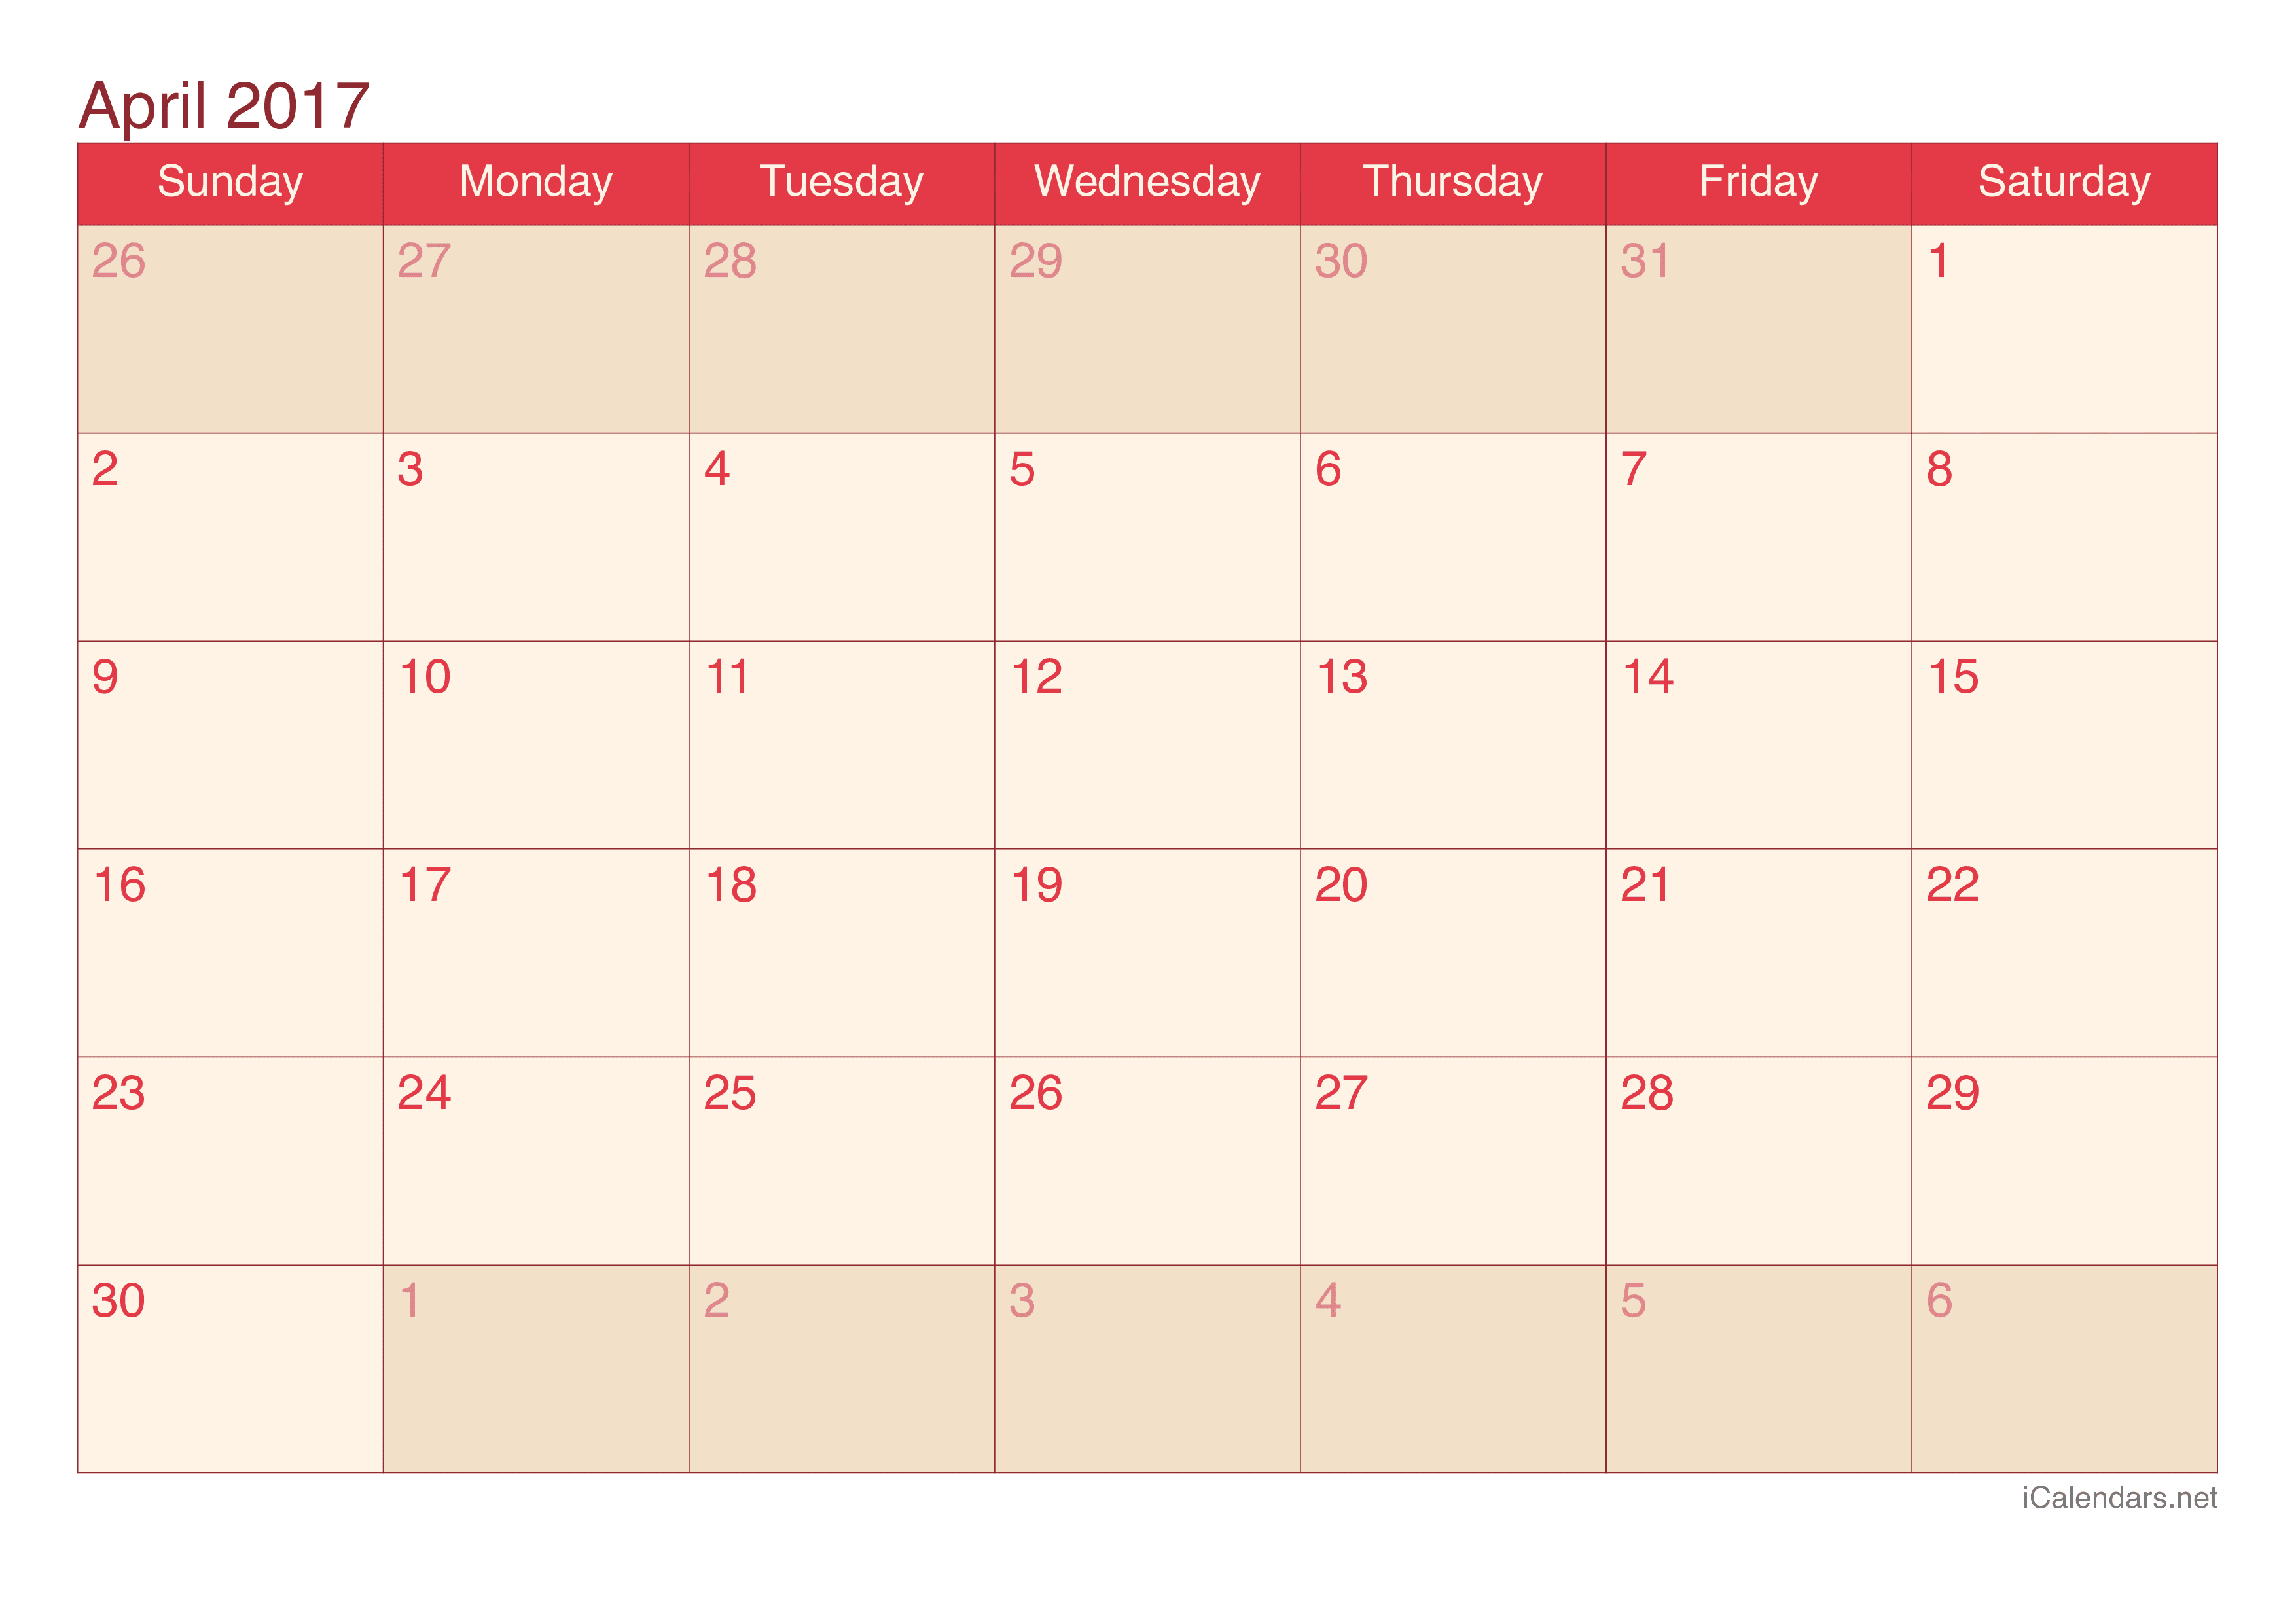 april-2017-printable-calendar-icalendars